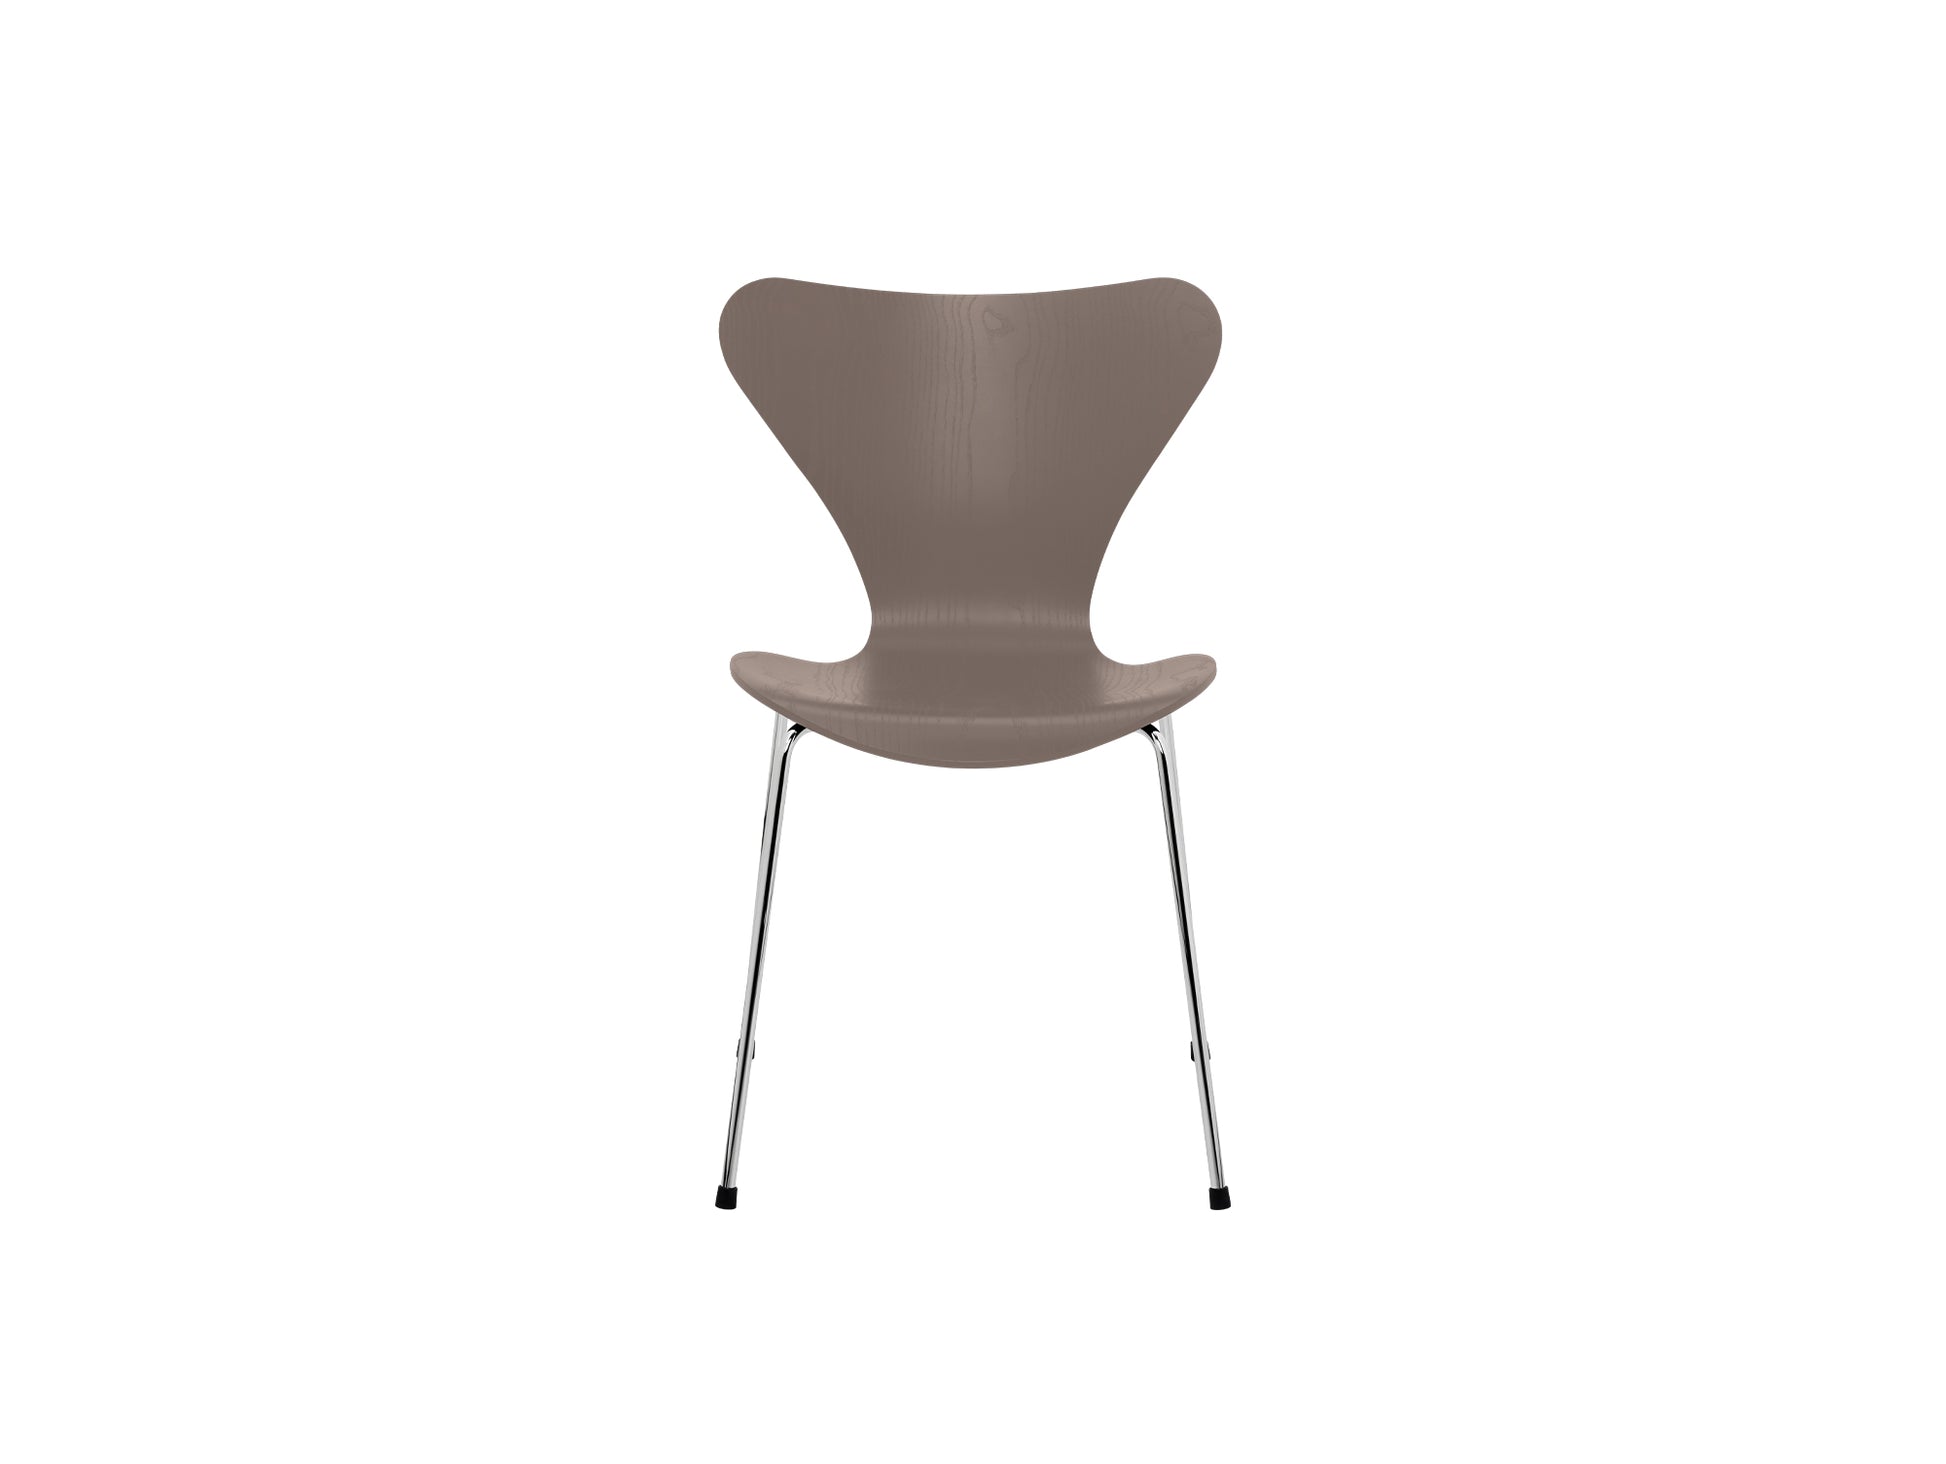 Series 7™ 3107 Dining Chair by Fritz Hansen - Deep Clay Coloured Ash Veneer Shell / Chromed Steel